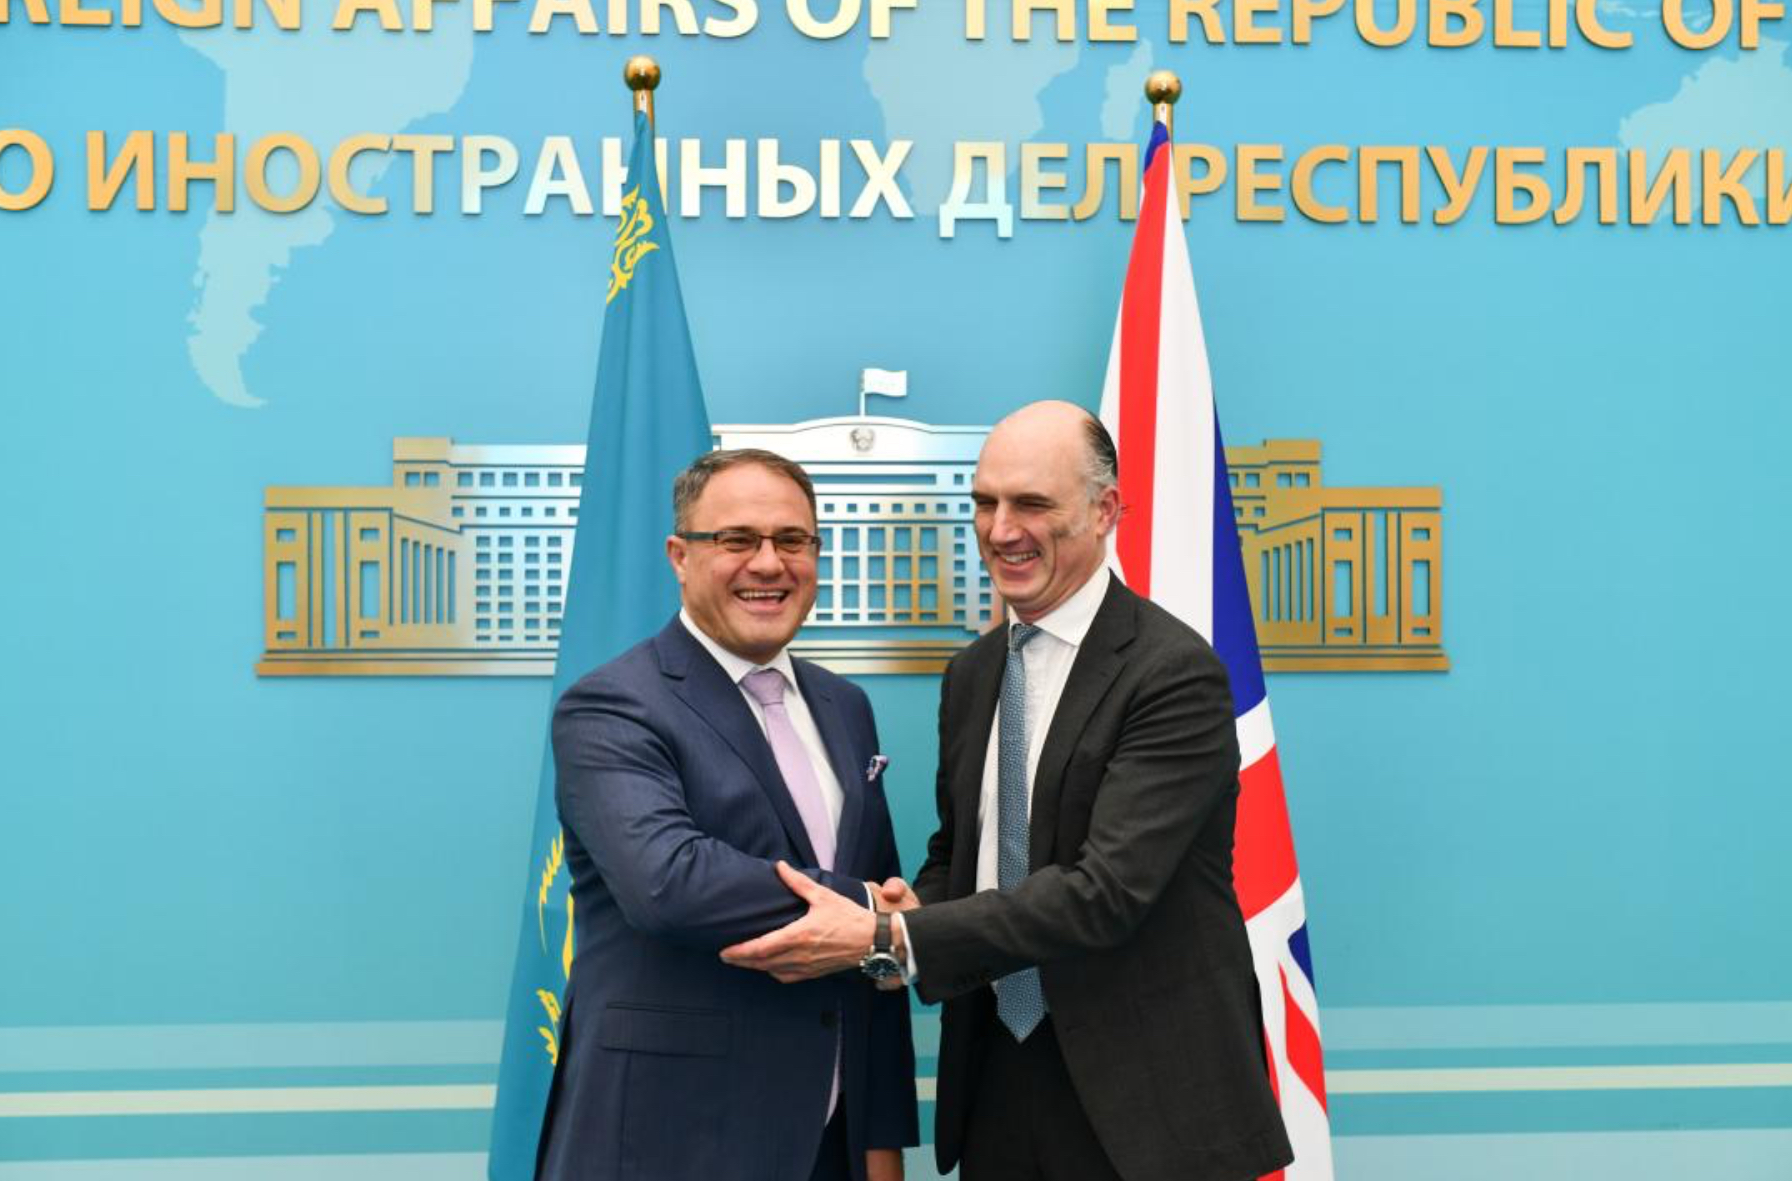 Kazakhstan and UK strengthen longstanding partnership with bilateral strategic agreement on horizon 